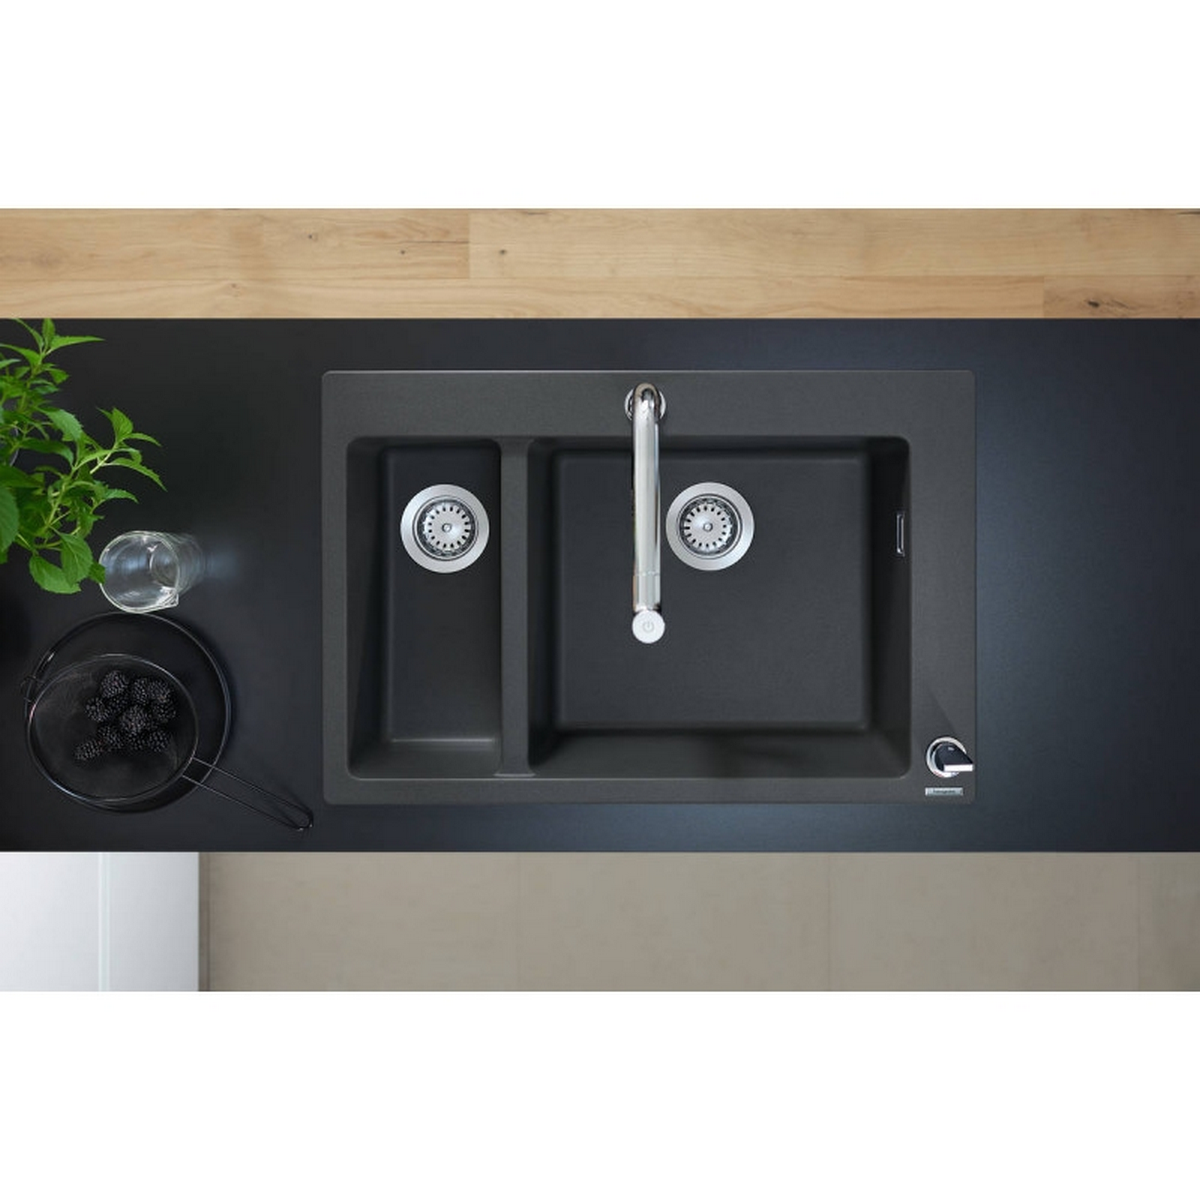 Кухонный комплект Hansgrohe C51-F635-09 43220000 цена 52620 грн - фотография 2